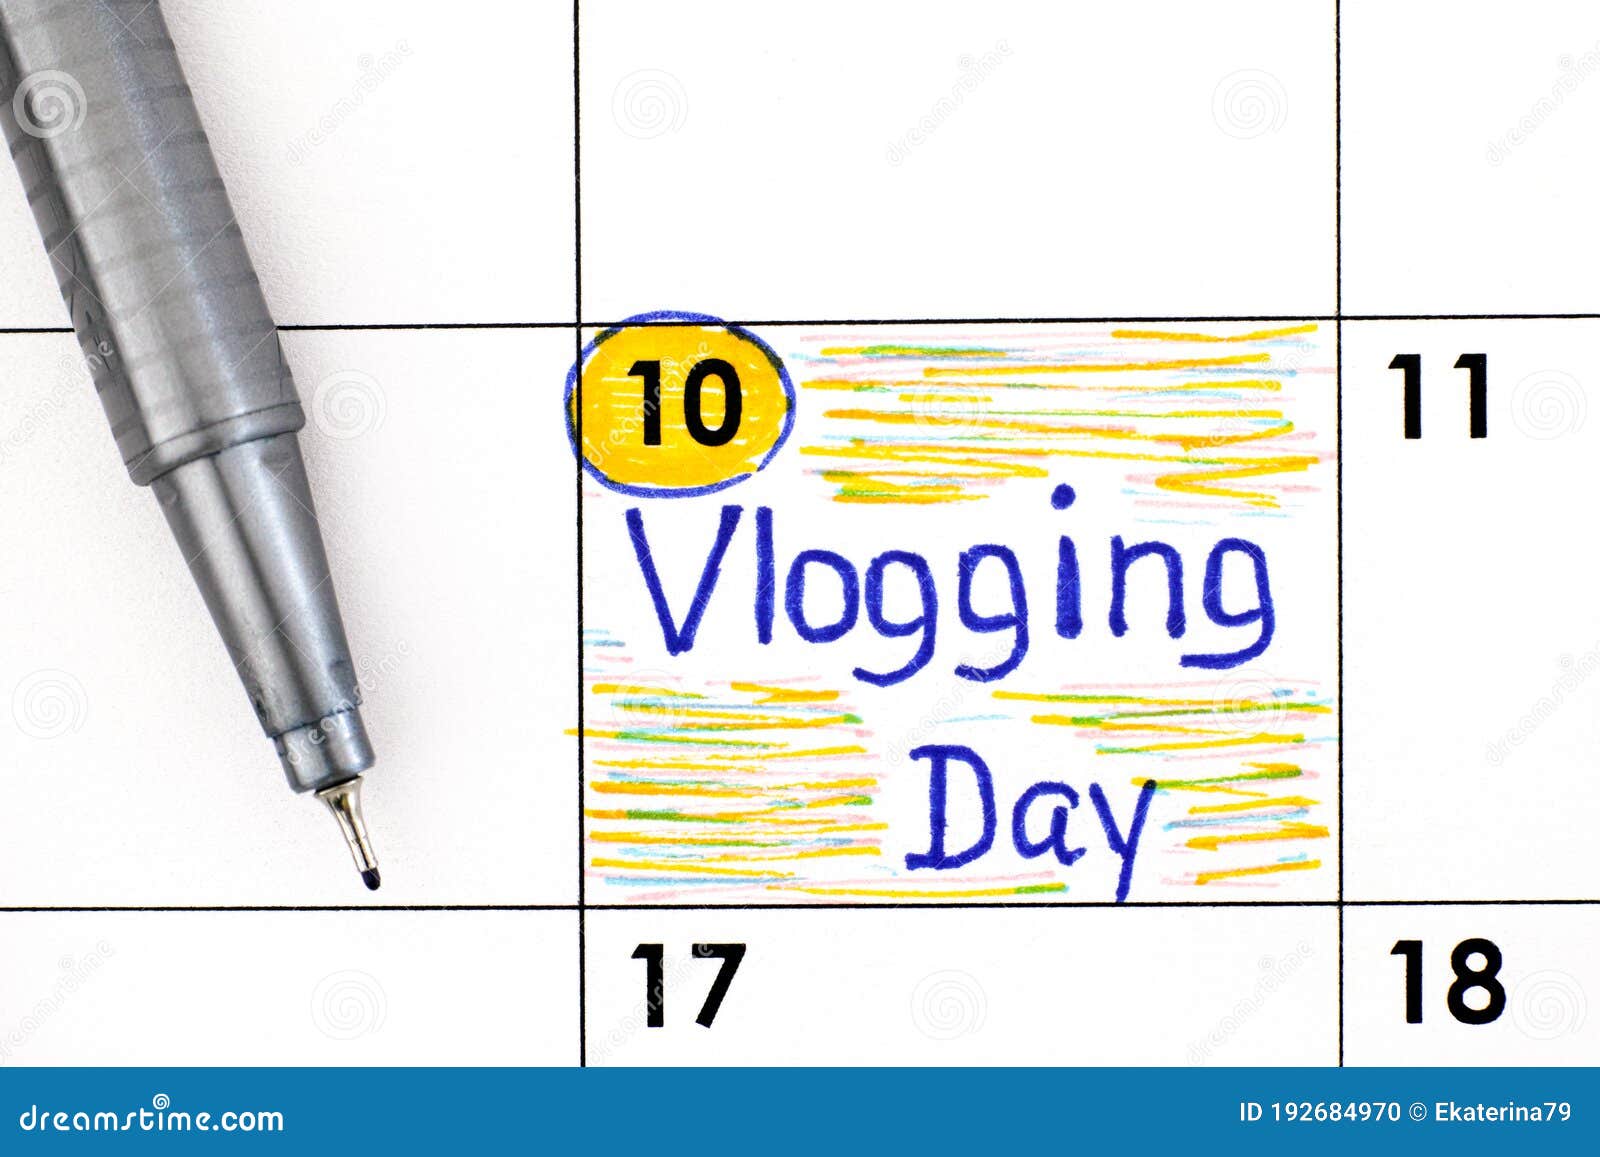 reminder vlogging day in calendar with pen